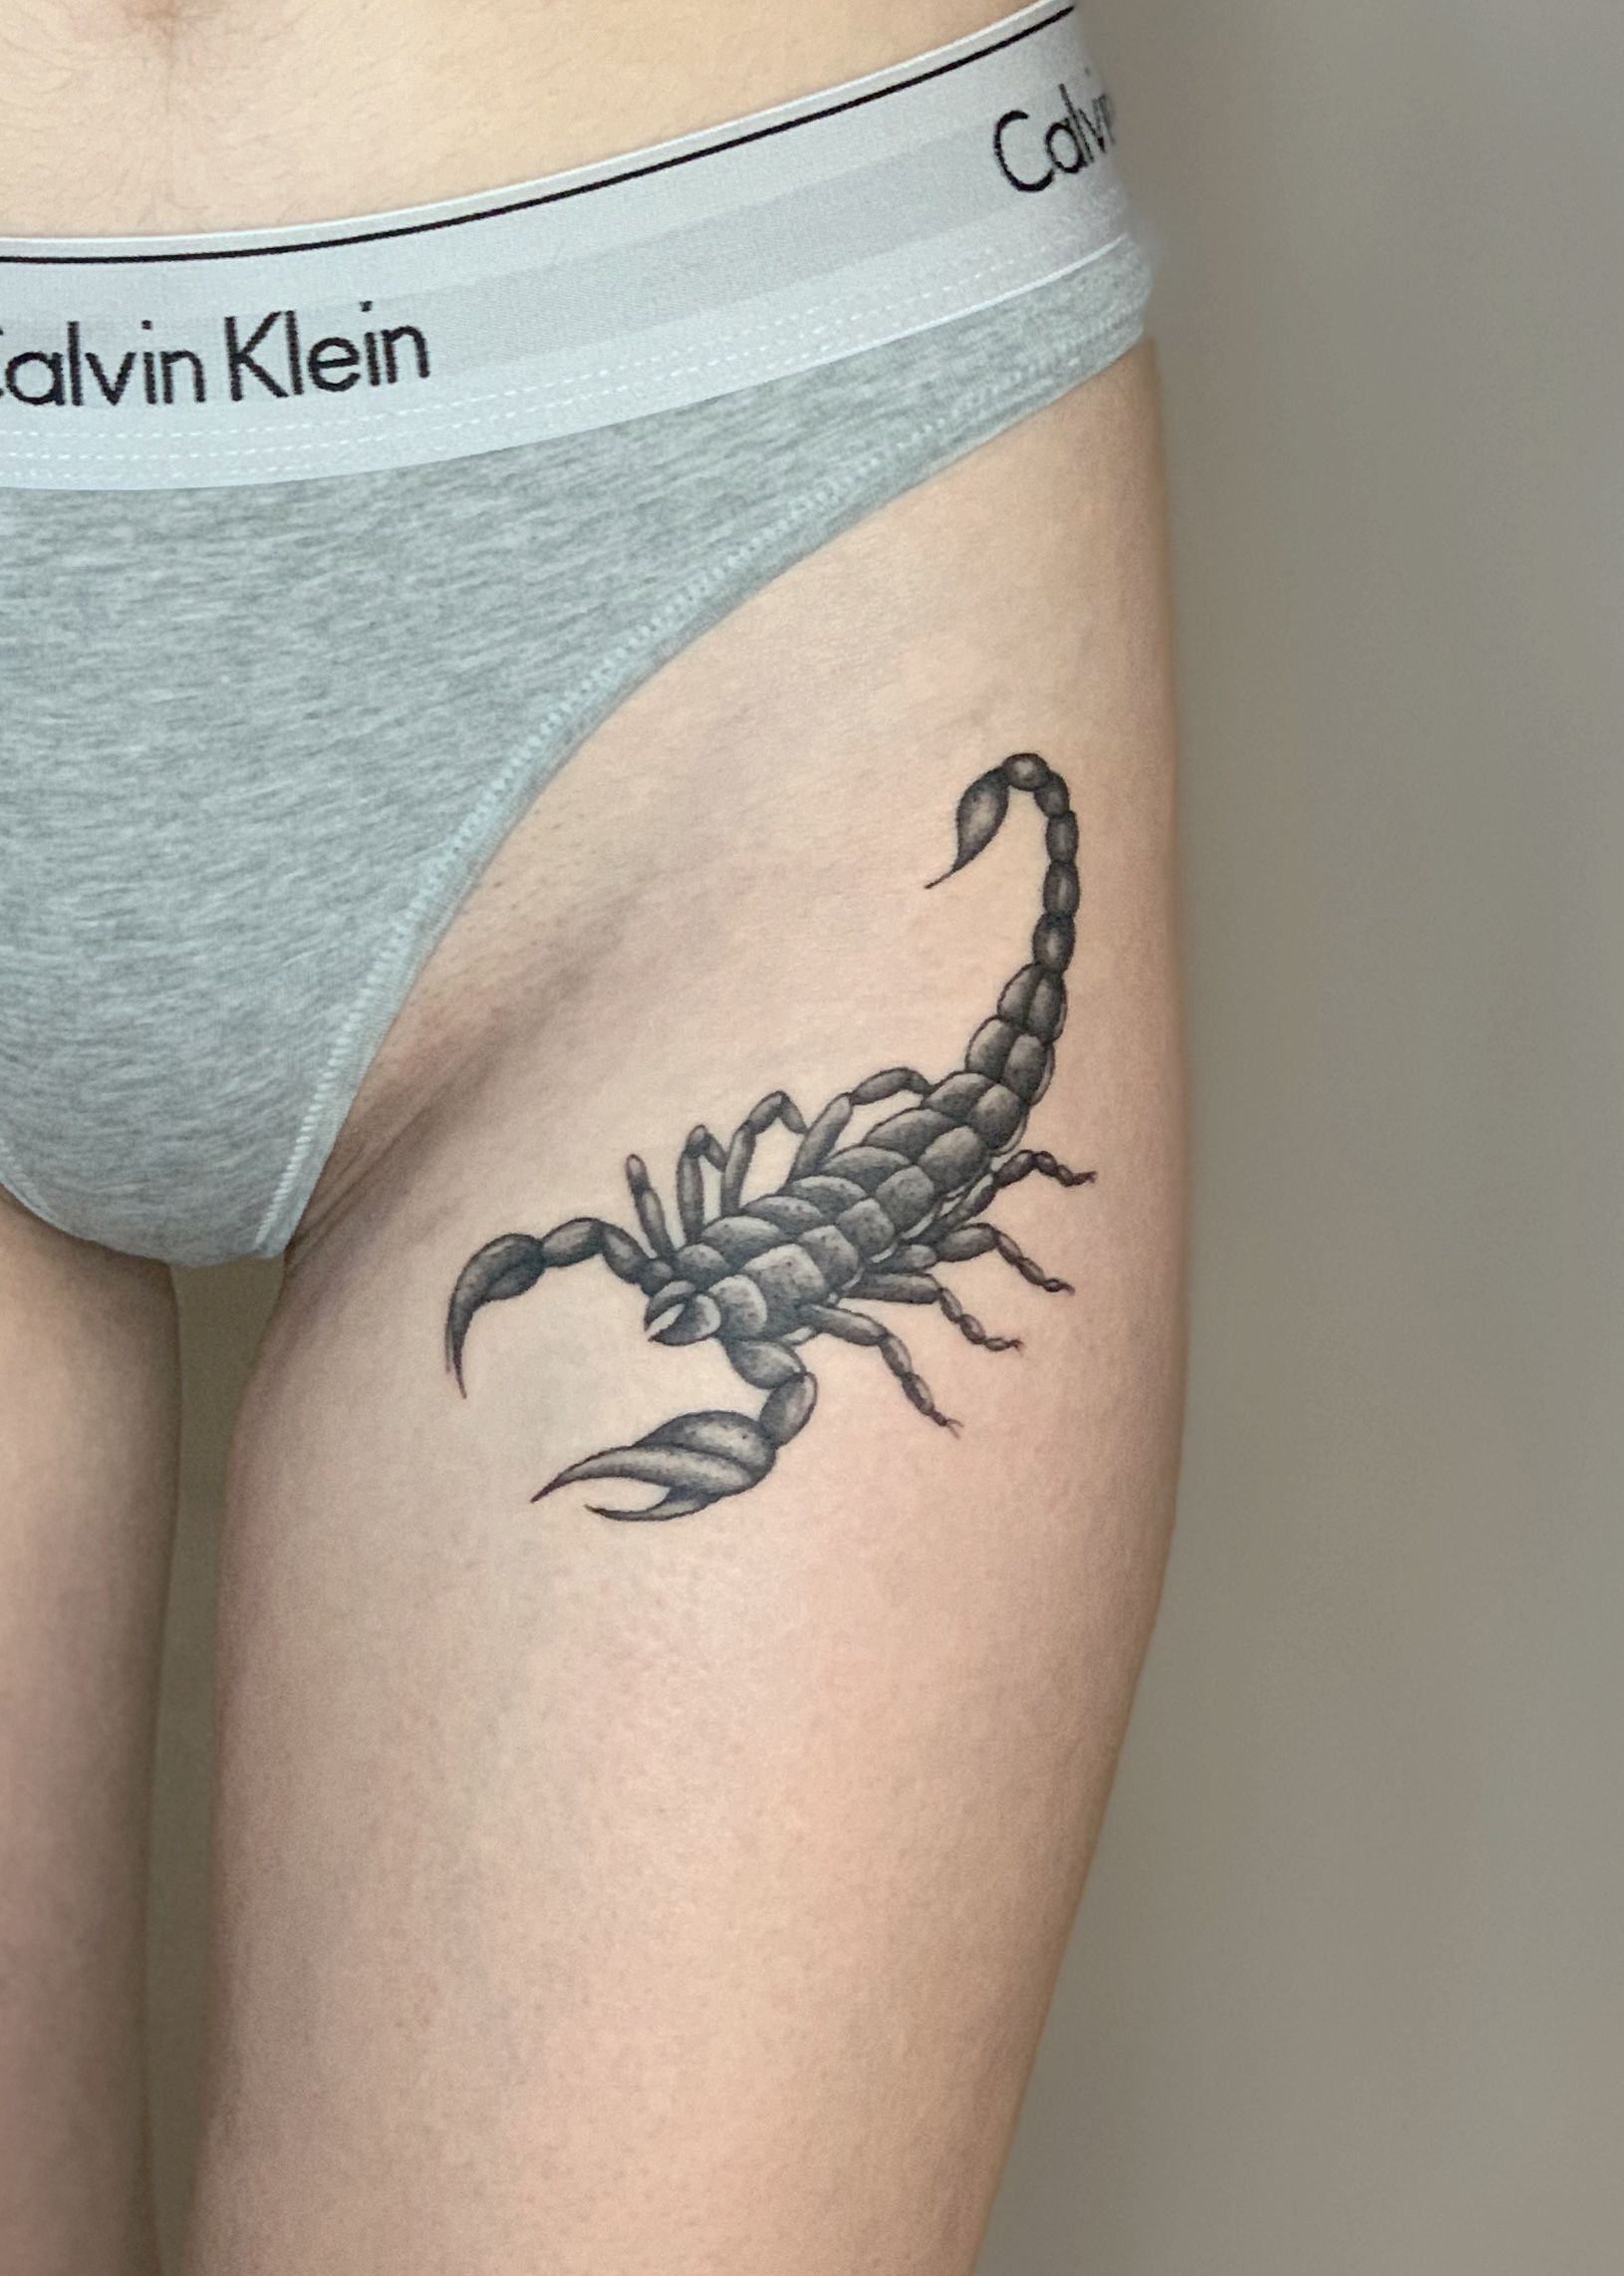 15 Best Scorpio Zodiac Sign Tattoo Designs and Ideas